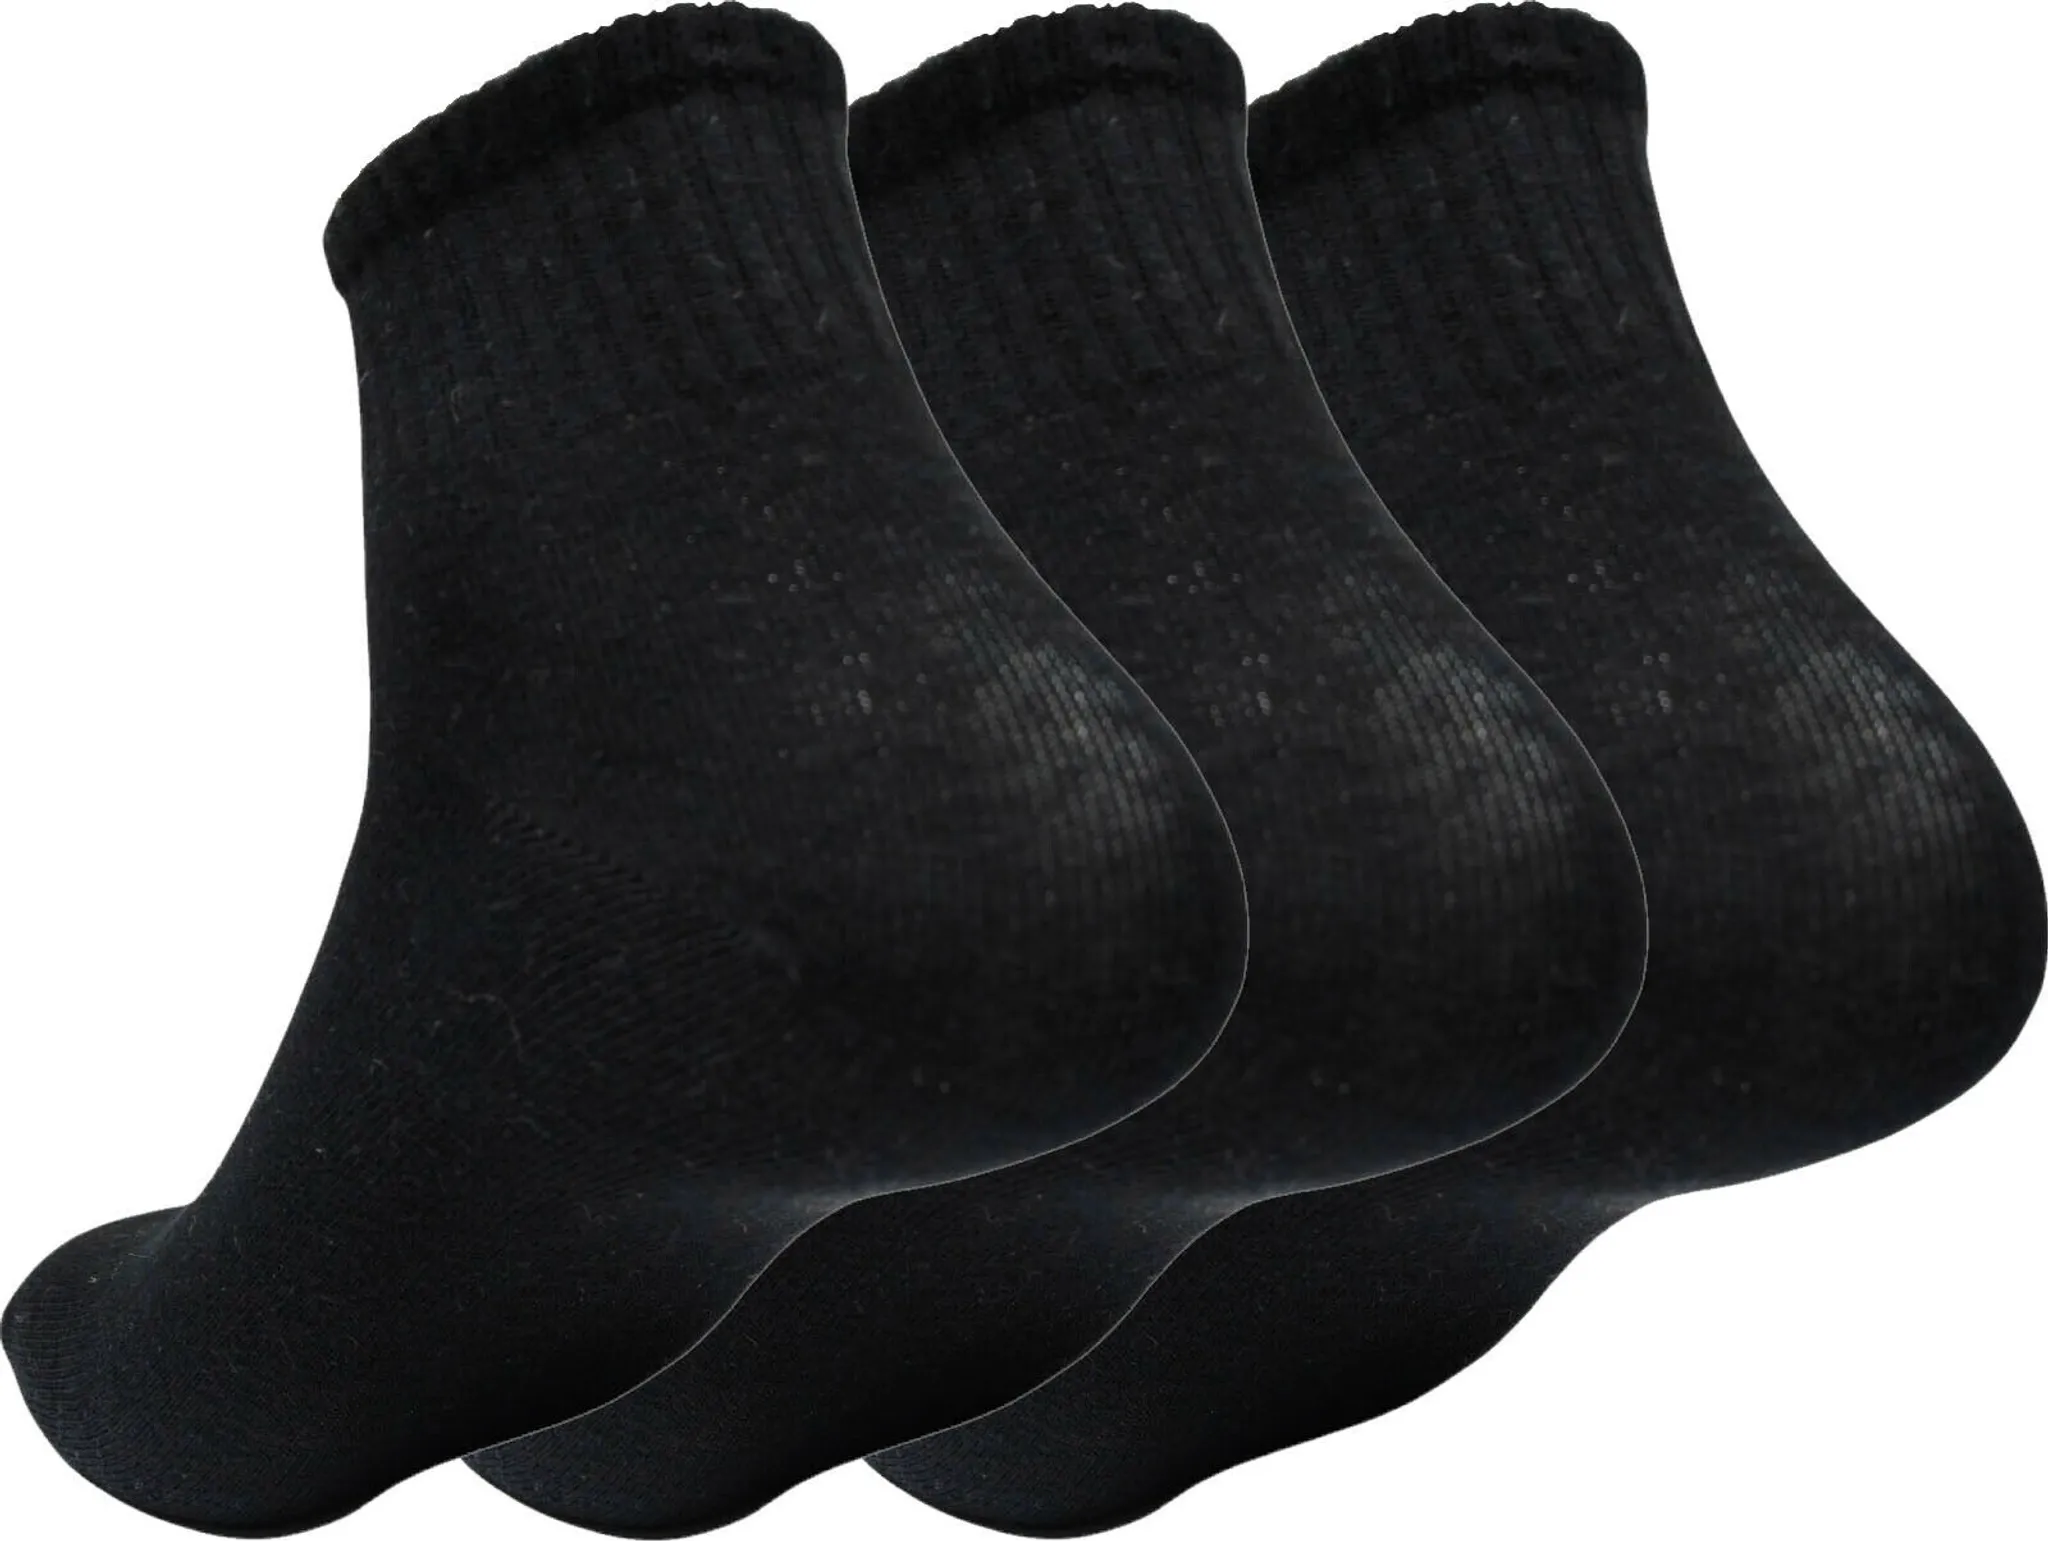 39-50 30 Paar Socken grau Sportsocken Arbeitssocken Tennissocken Gr 